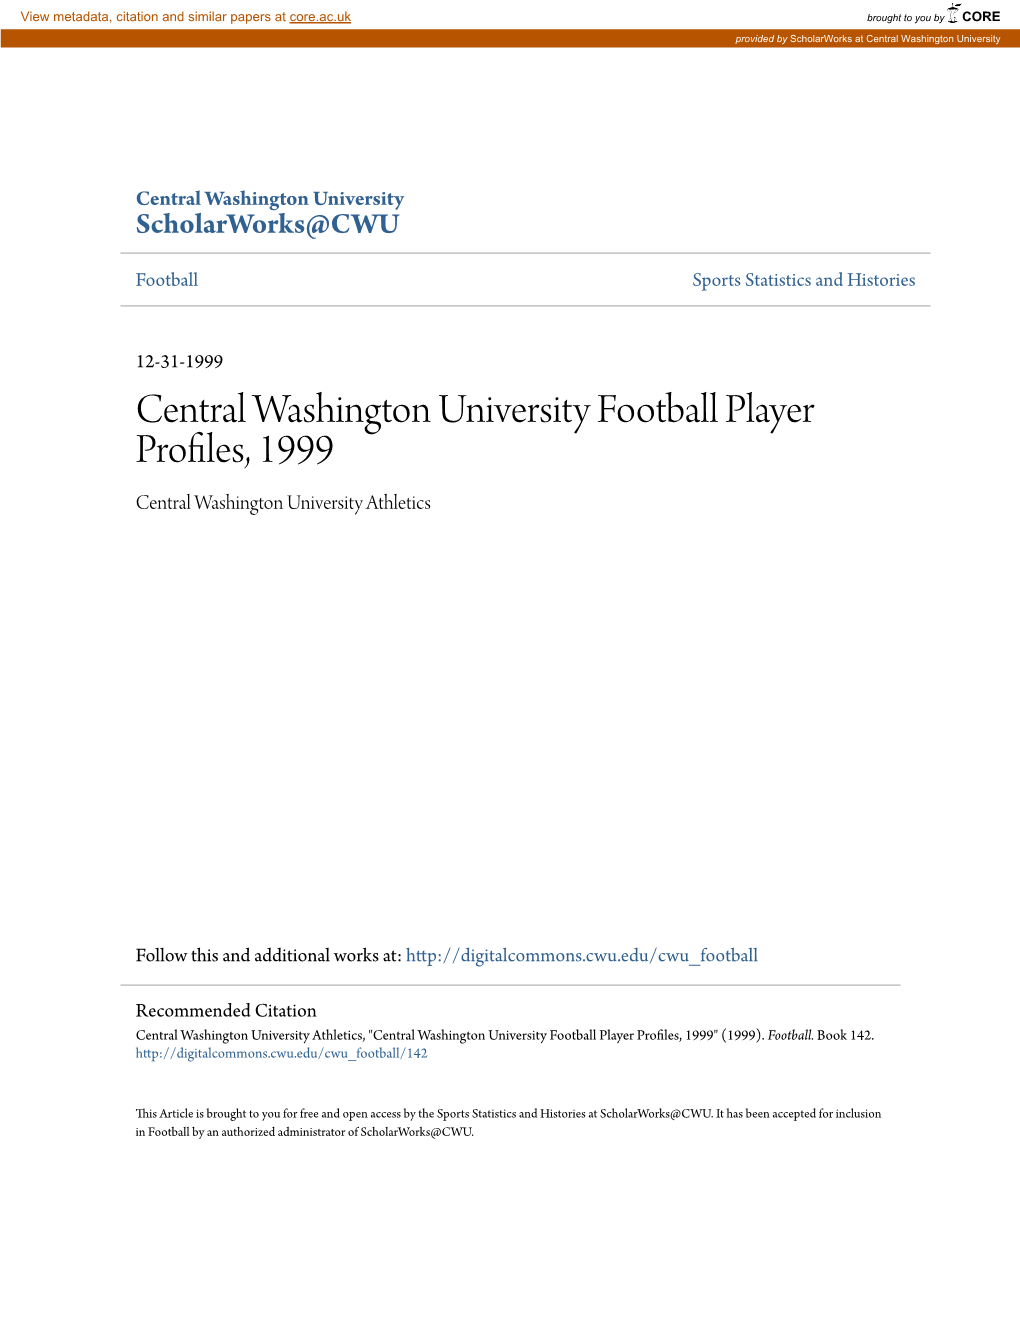 Central Washington University Football Player Profiles, 1999 Central Washington University Athletics